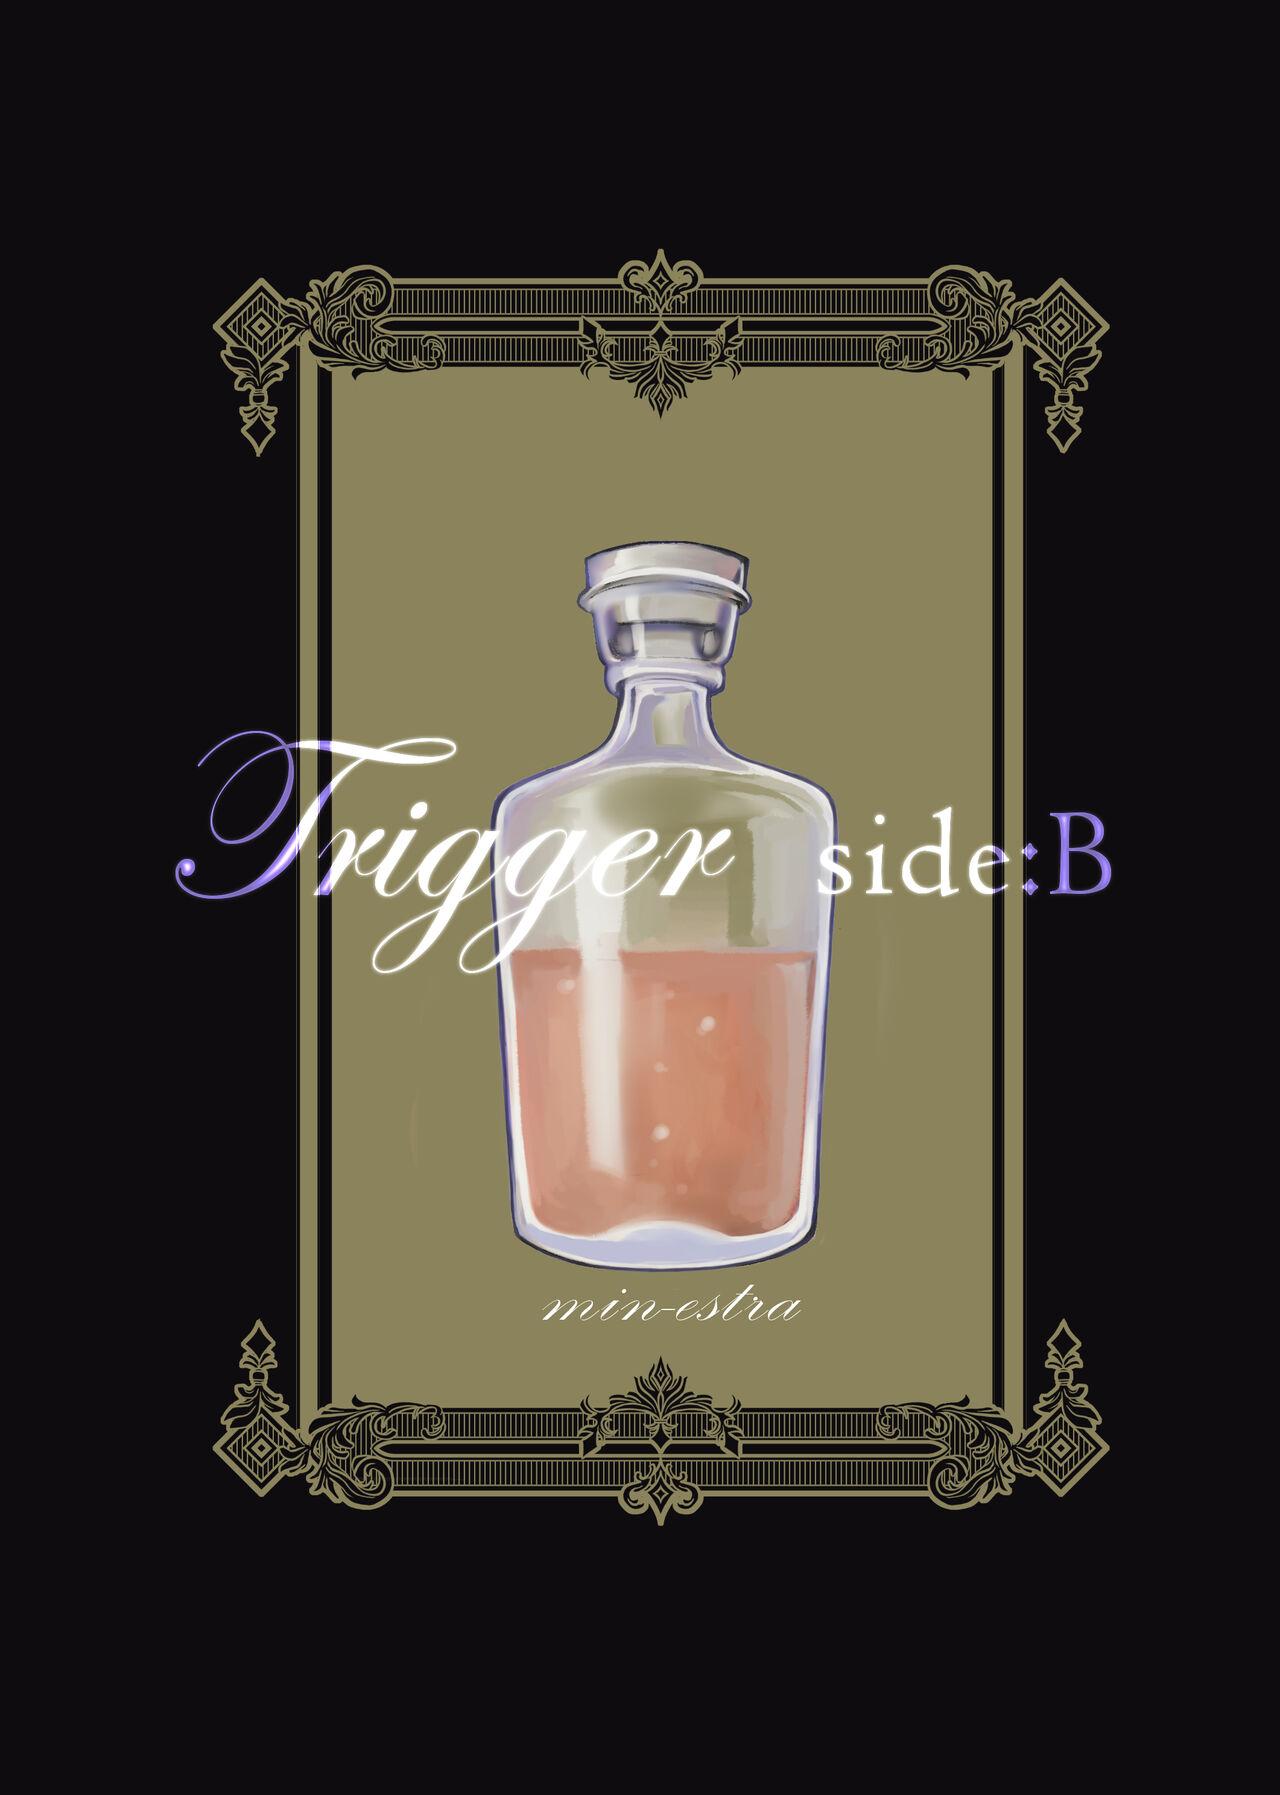 Kink Trigger side:B【R18】 - The walking dead Hottie - Picture 1